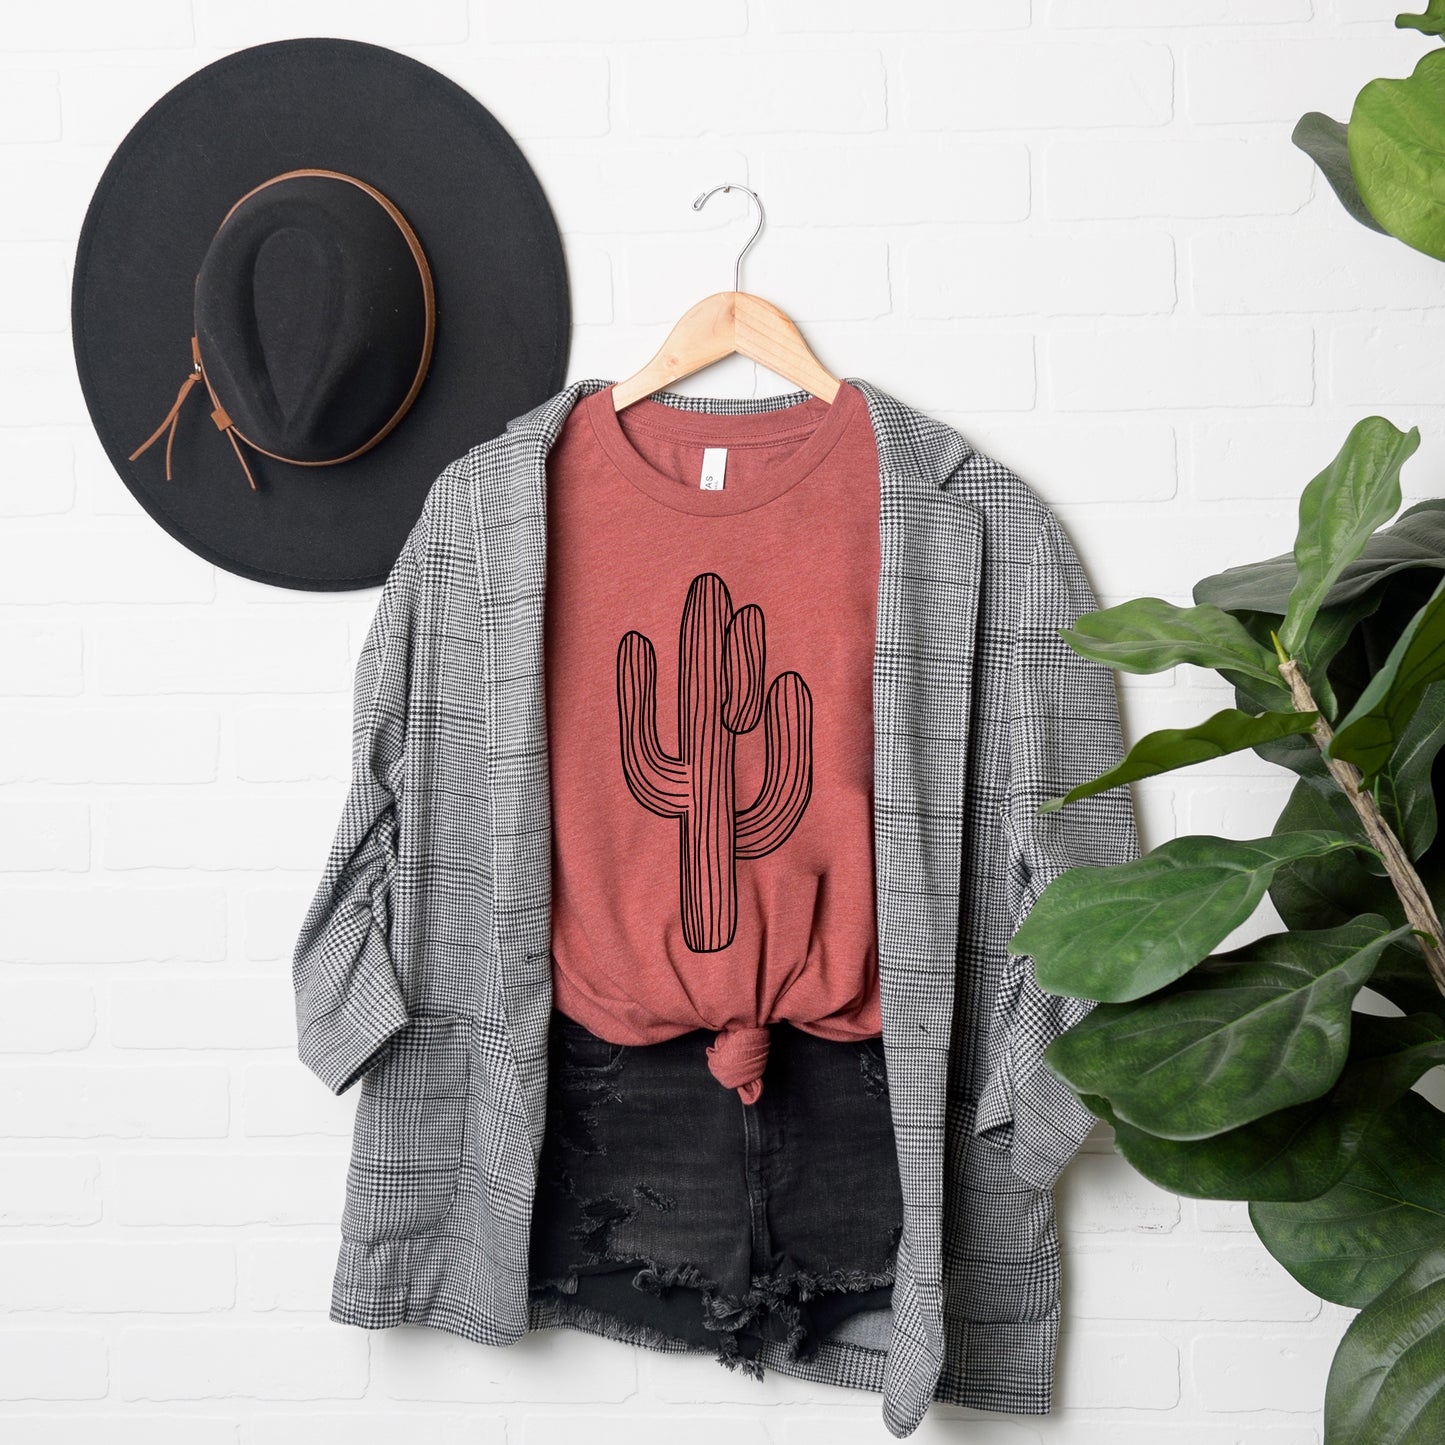 Cactus | Short Sleeve Graphic Tee